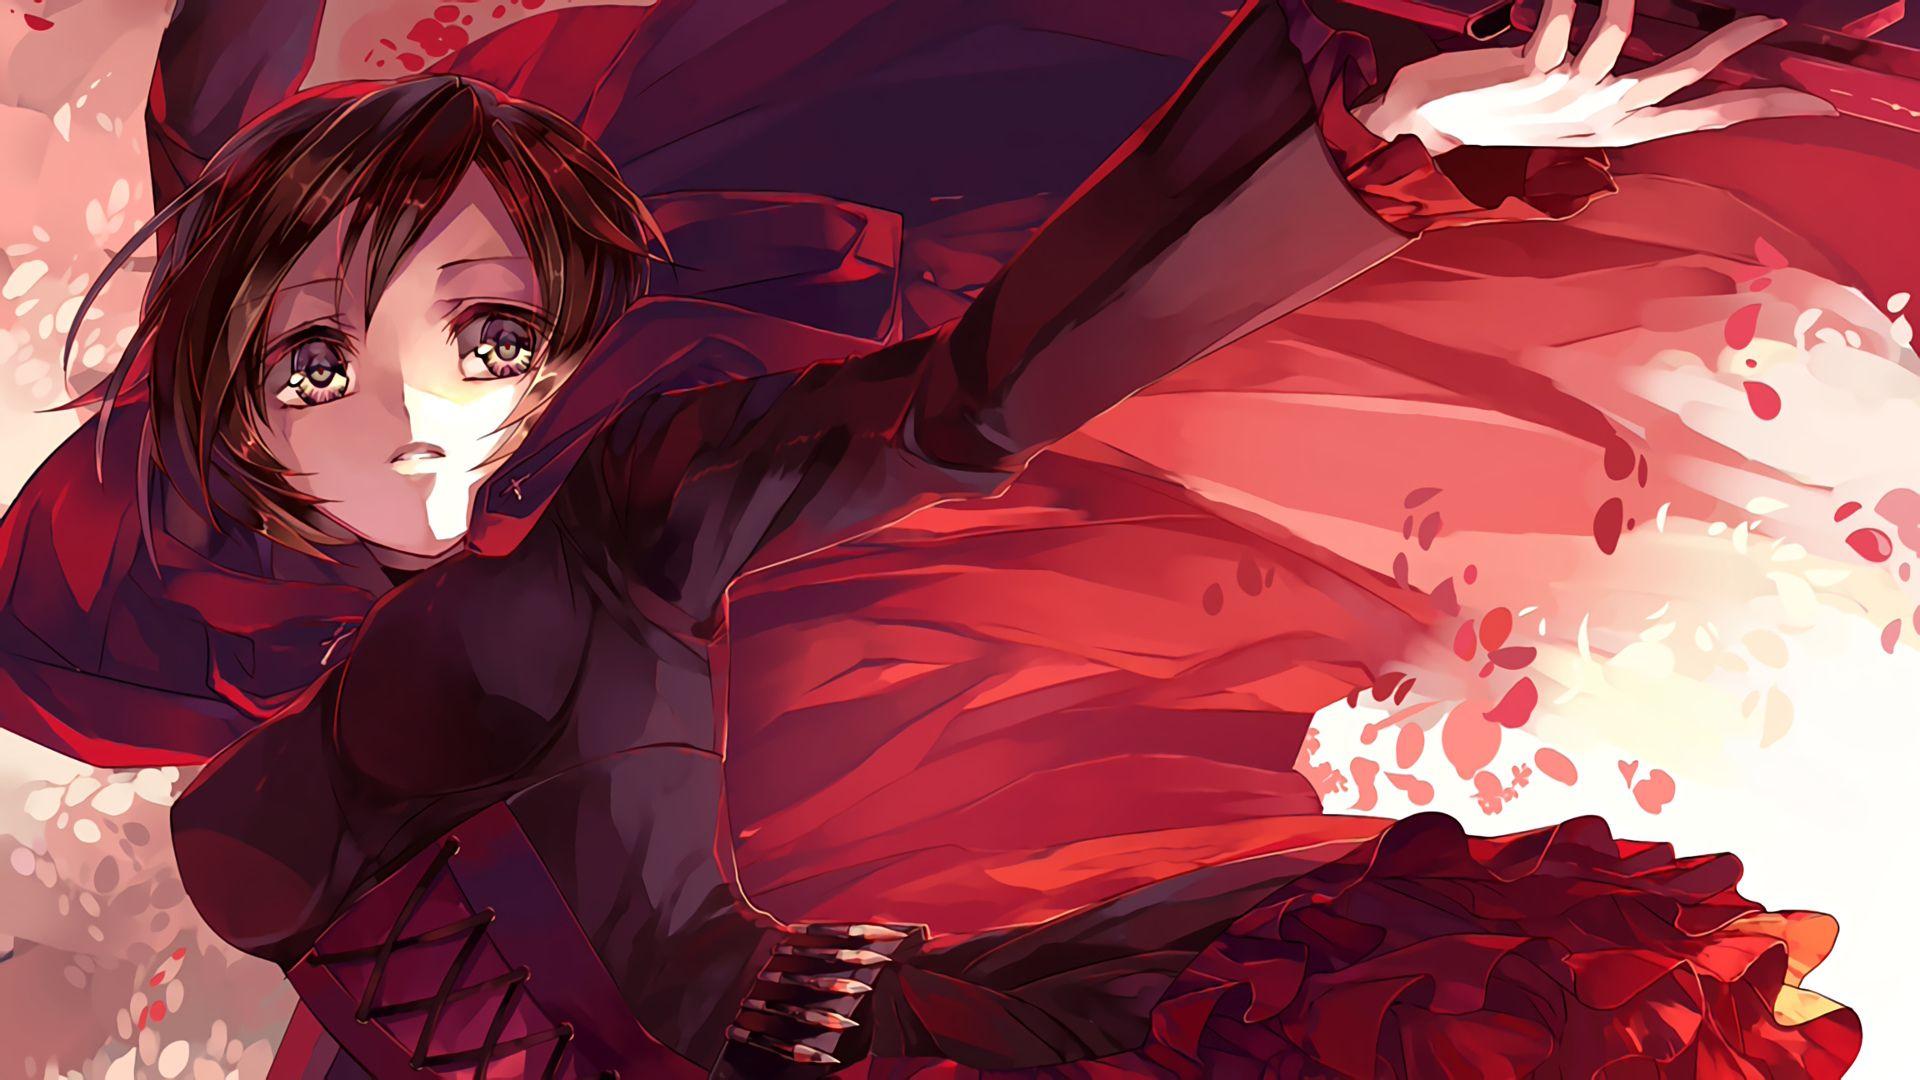 Anime RWBY Ruby Rose Wallpaper. Rwby, Anime, Rwby wallpaper